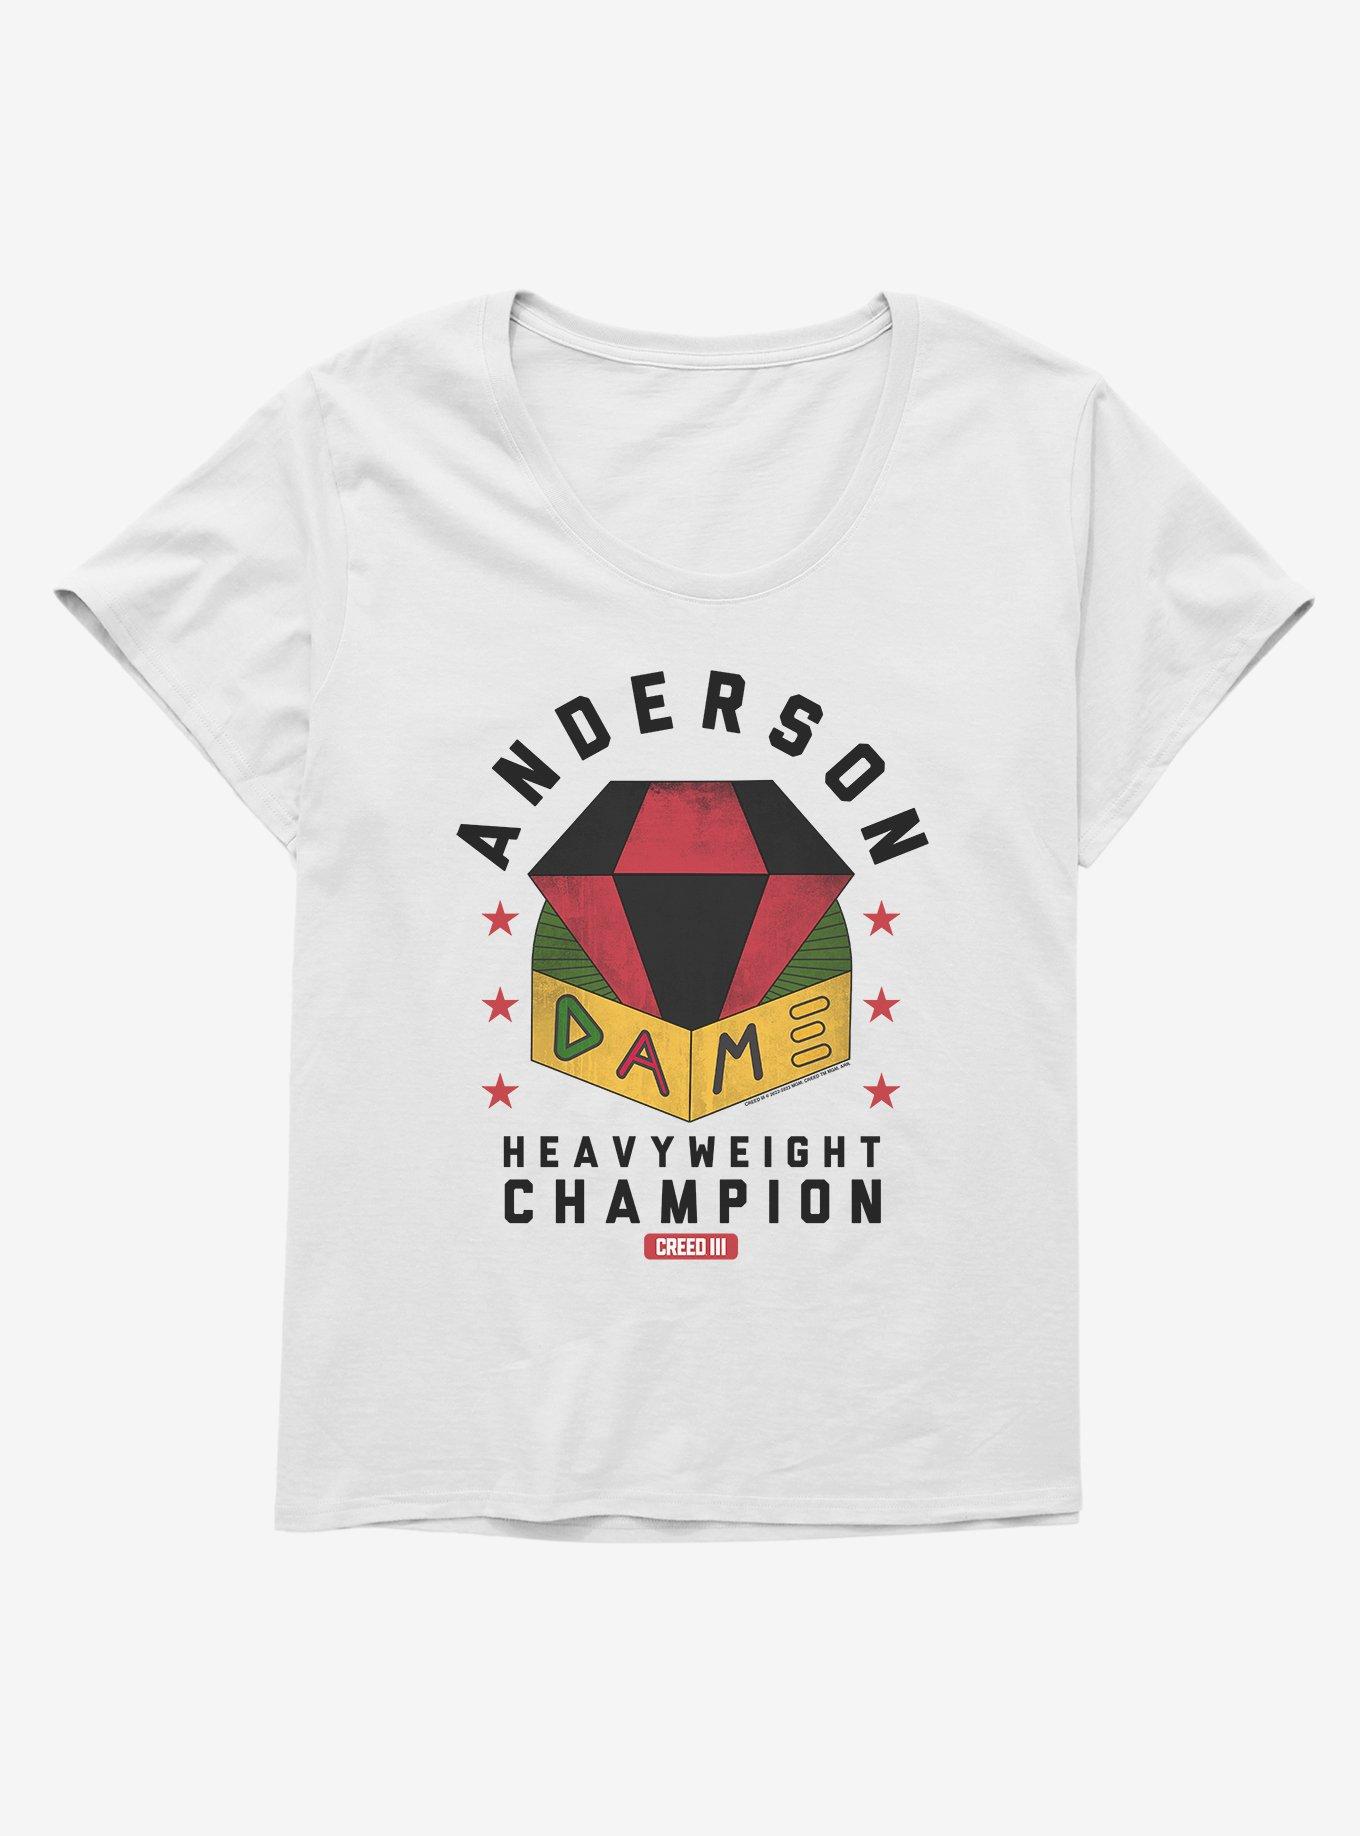 Creed III Anderson Dame Heavyweight Champion Girls T-Shirt Plus